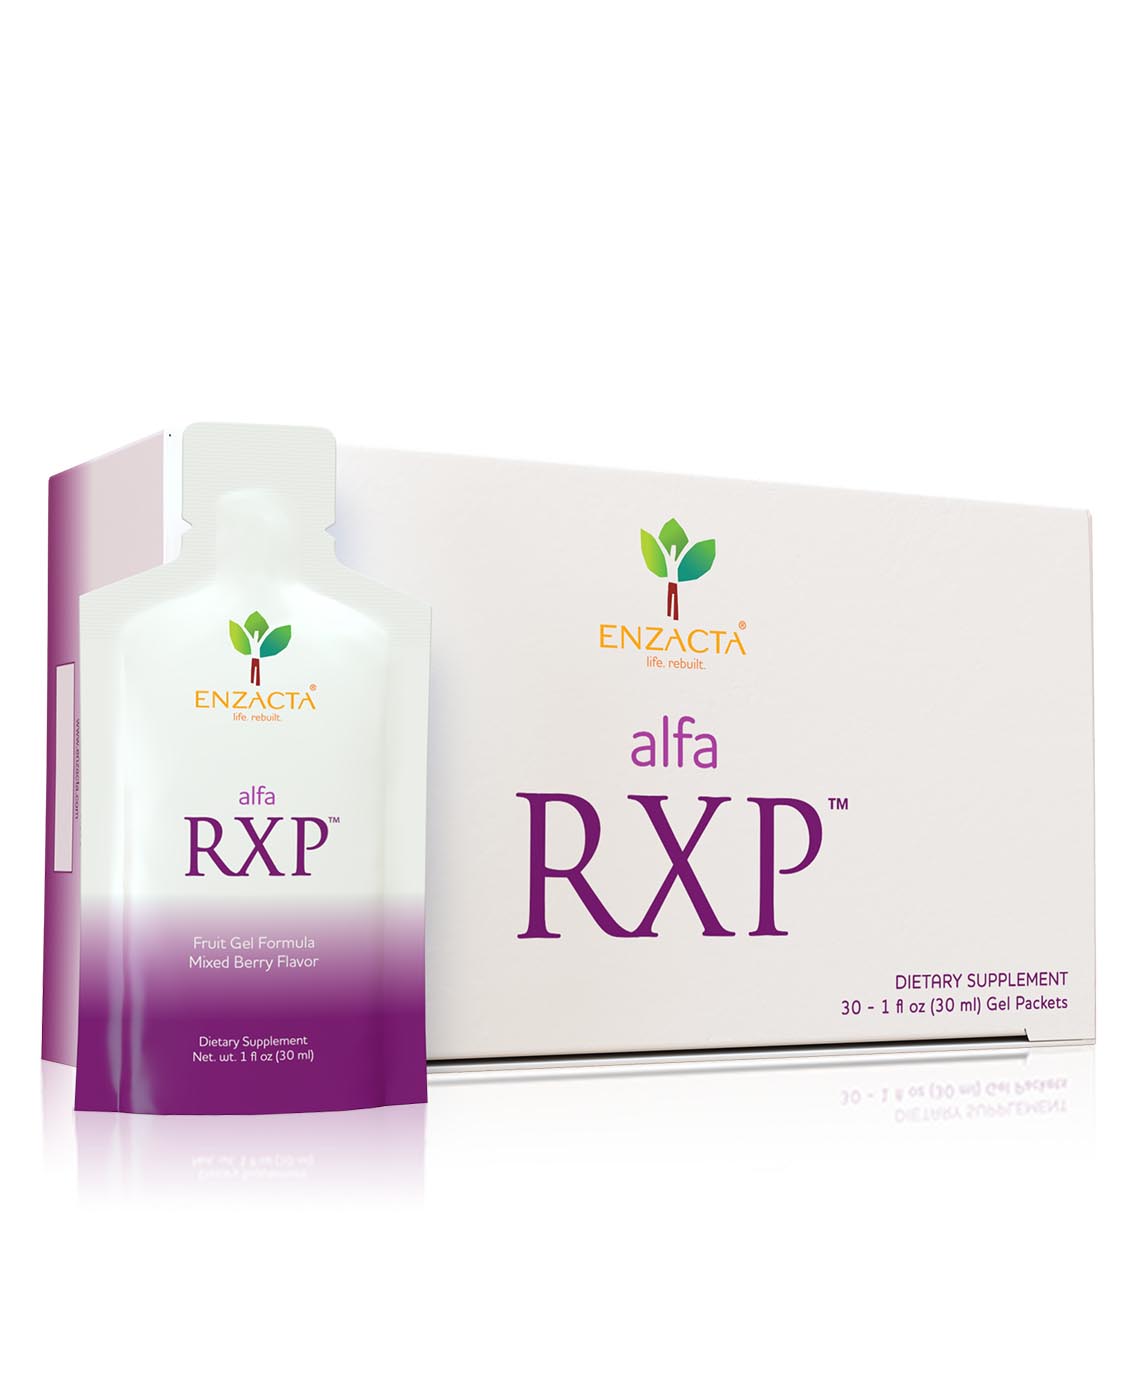 alfa RXP – Box & Packet